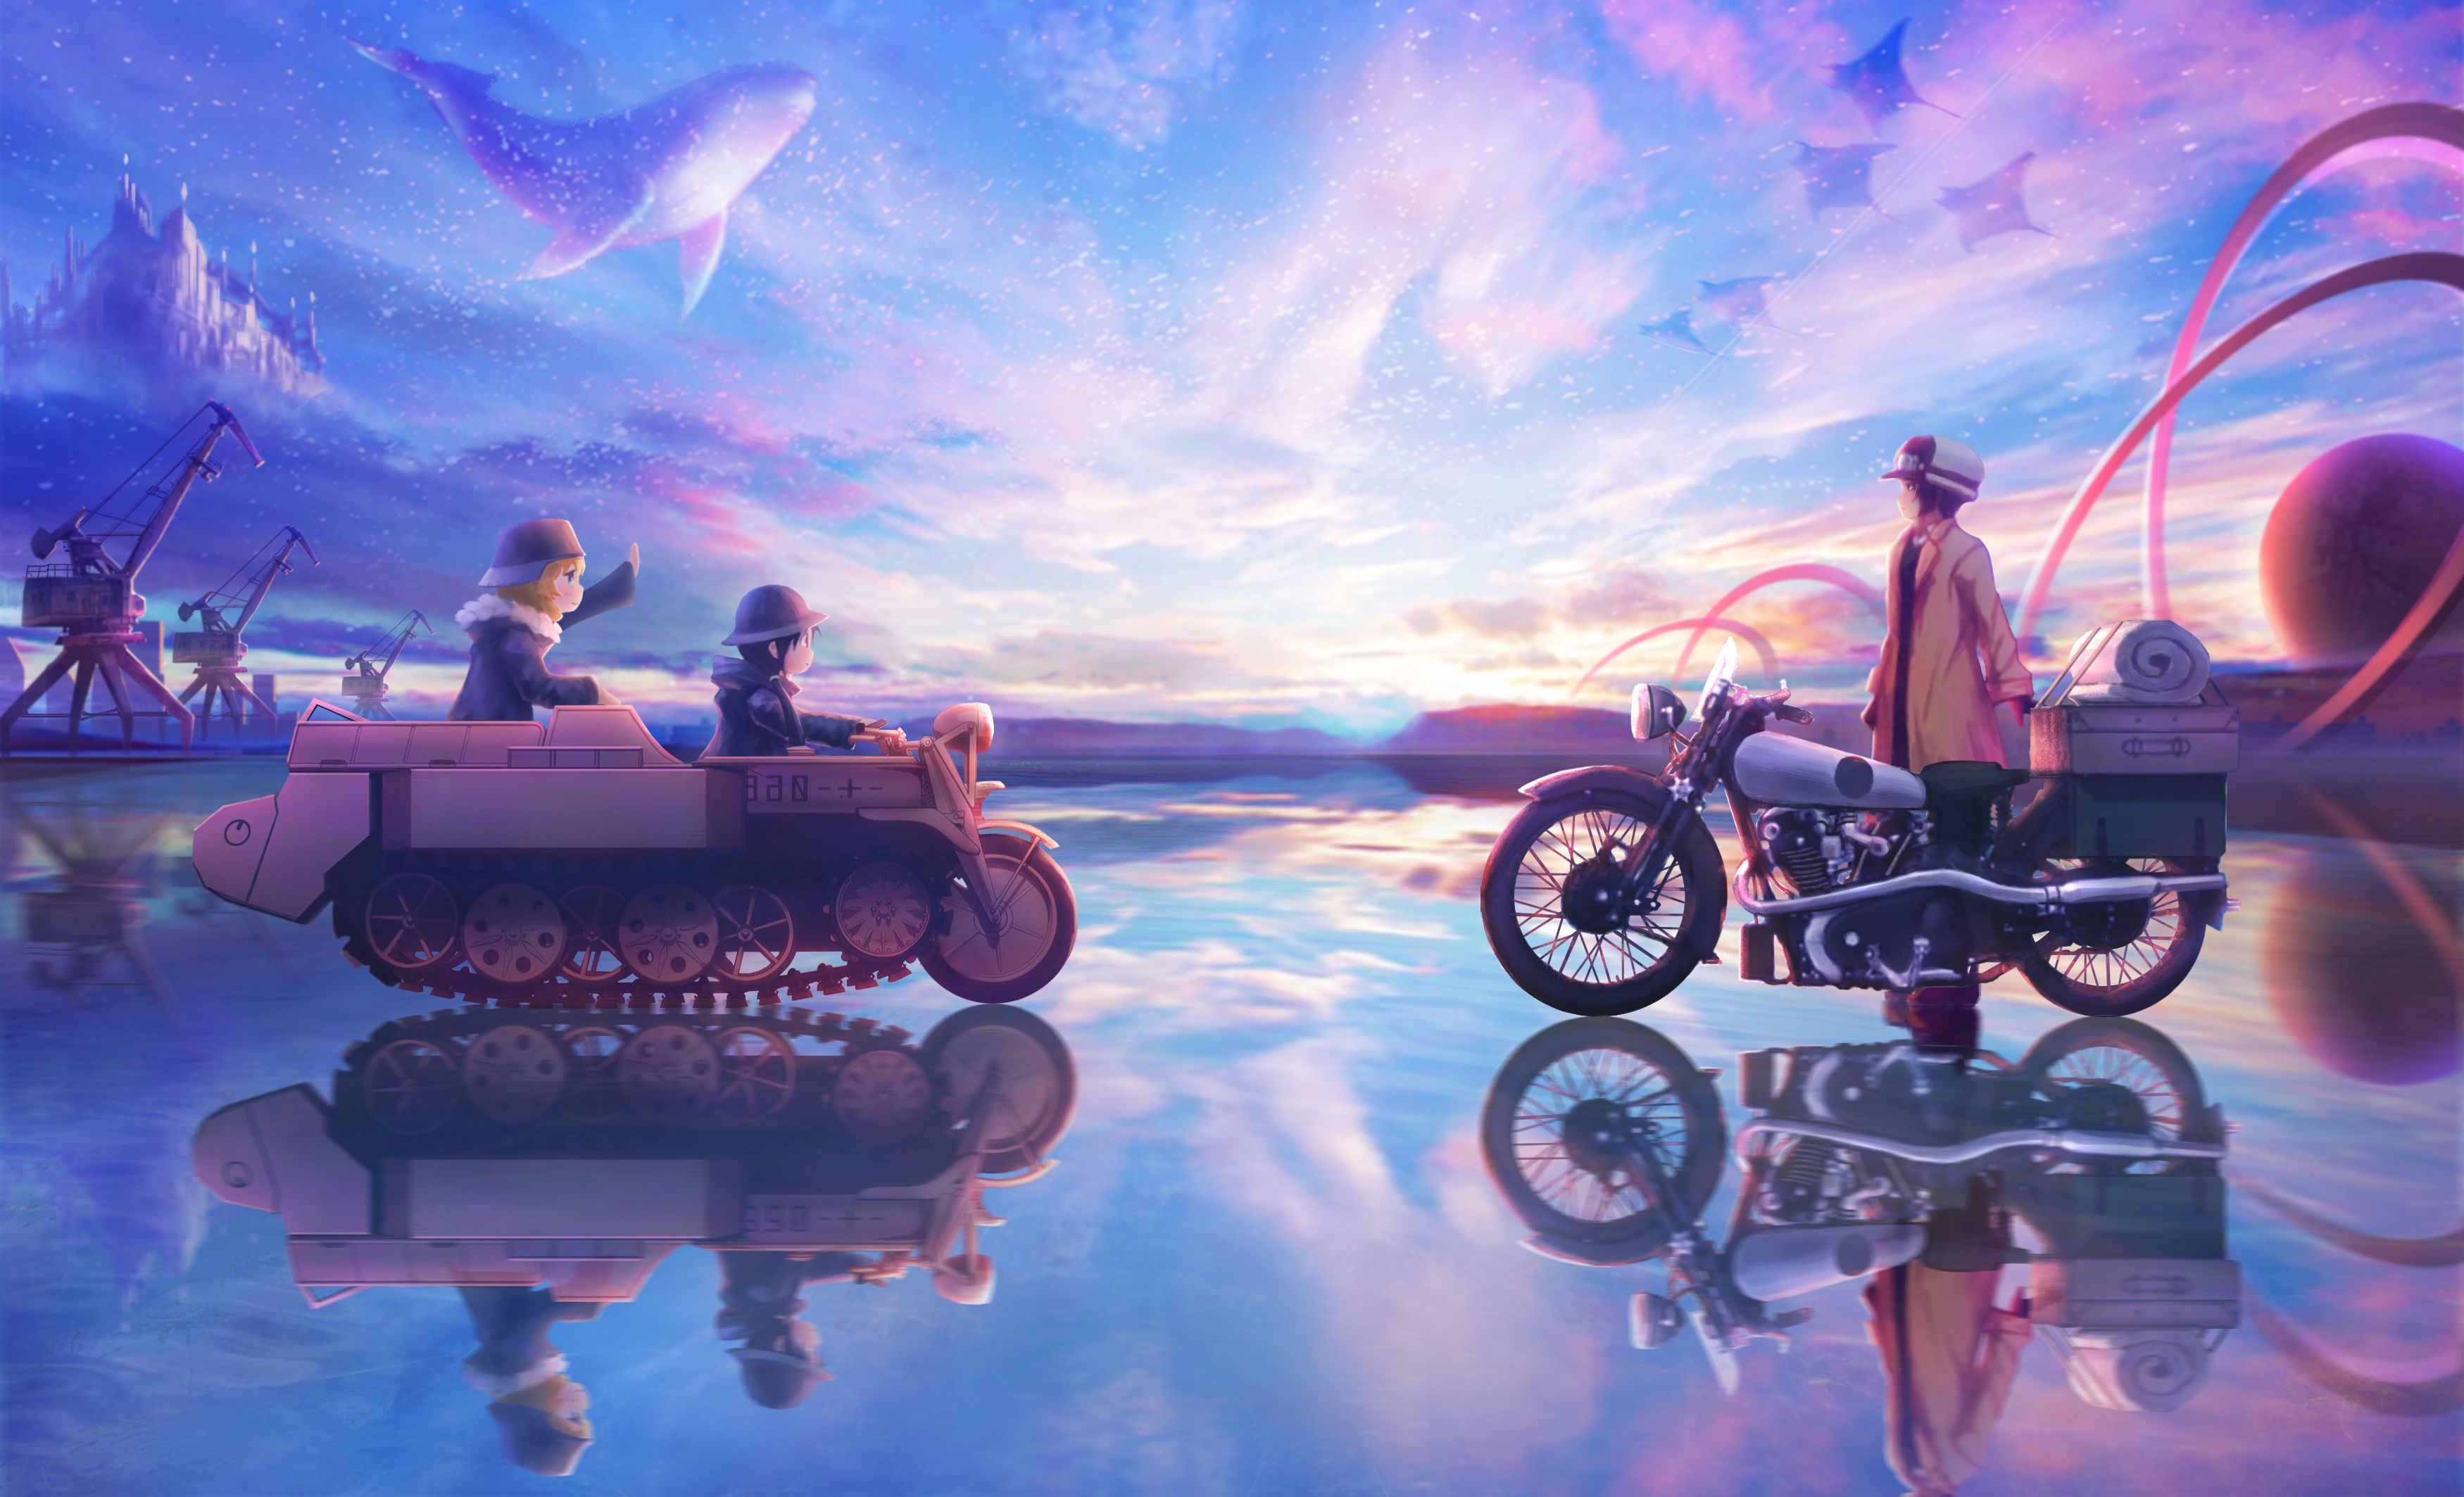 Anime Girl On Bike Ice, HD Anime, 4k Wallpaper, Image